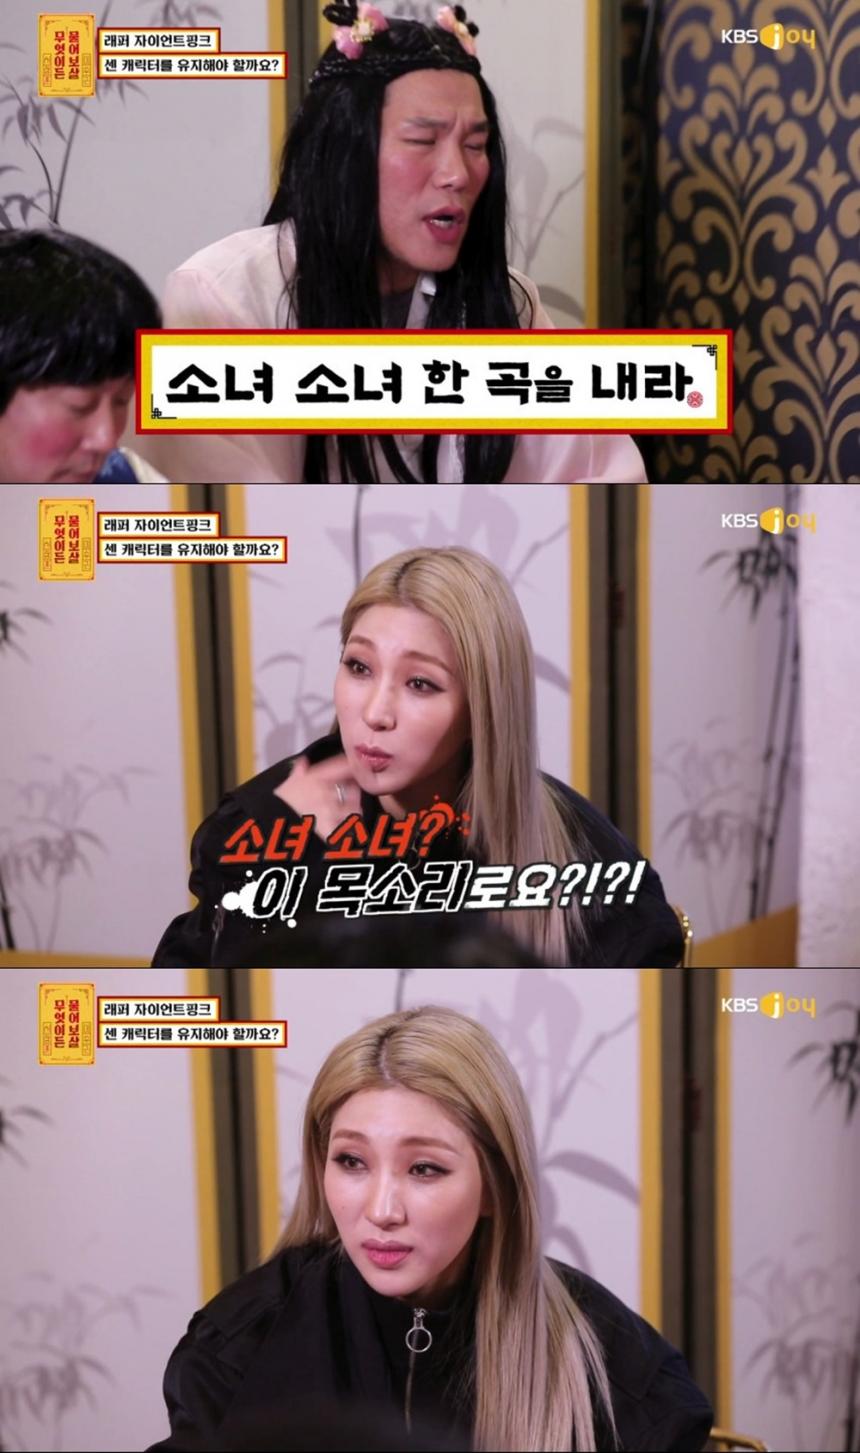 KBS조이 ‘무엇이든 물어보살’ 방송 캡처